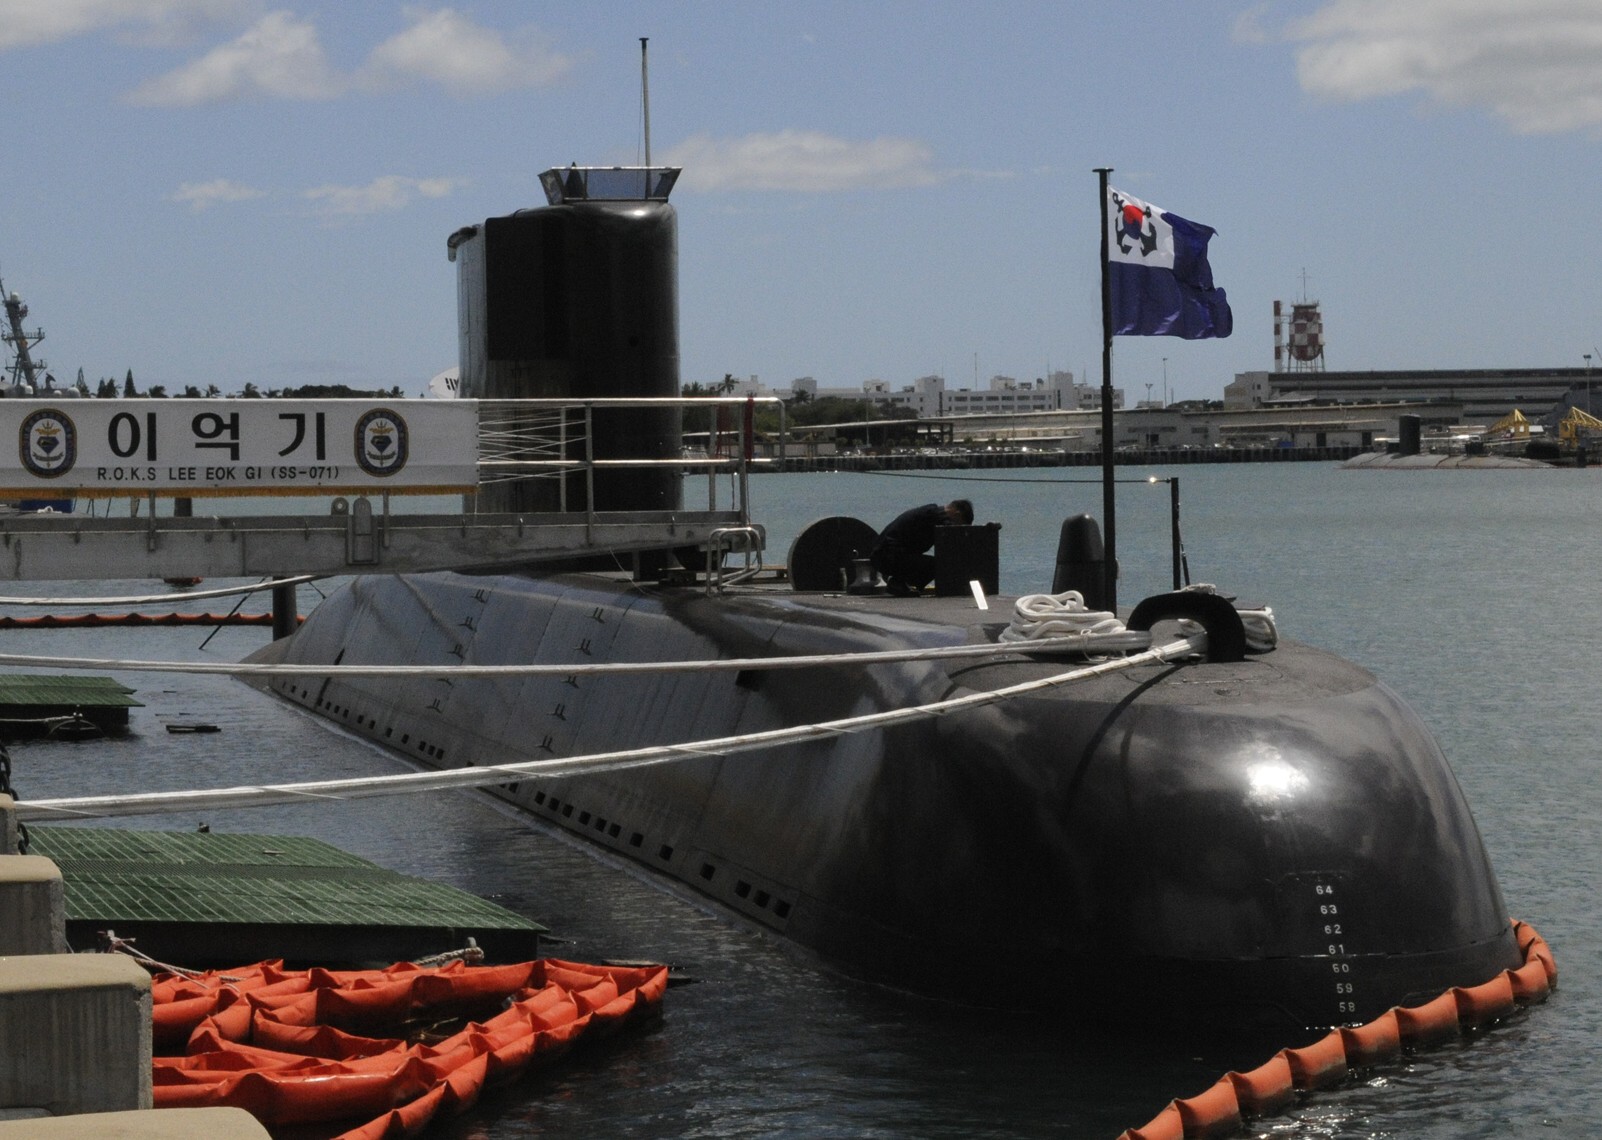 ss-071 roks lee eokgi jang bogo class kss-i type 209-1200 attack submarine republic of korea navy rokn 533mm sut torpedo ugm-84 harpoon ssm 02